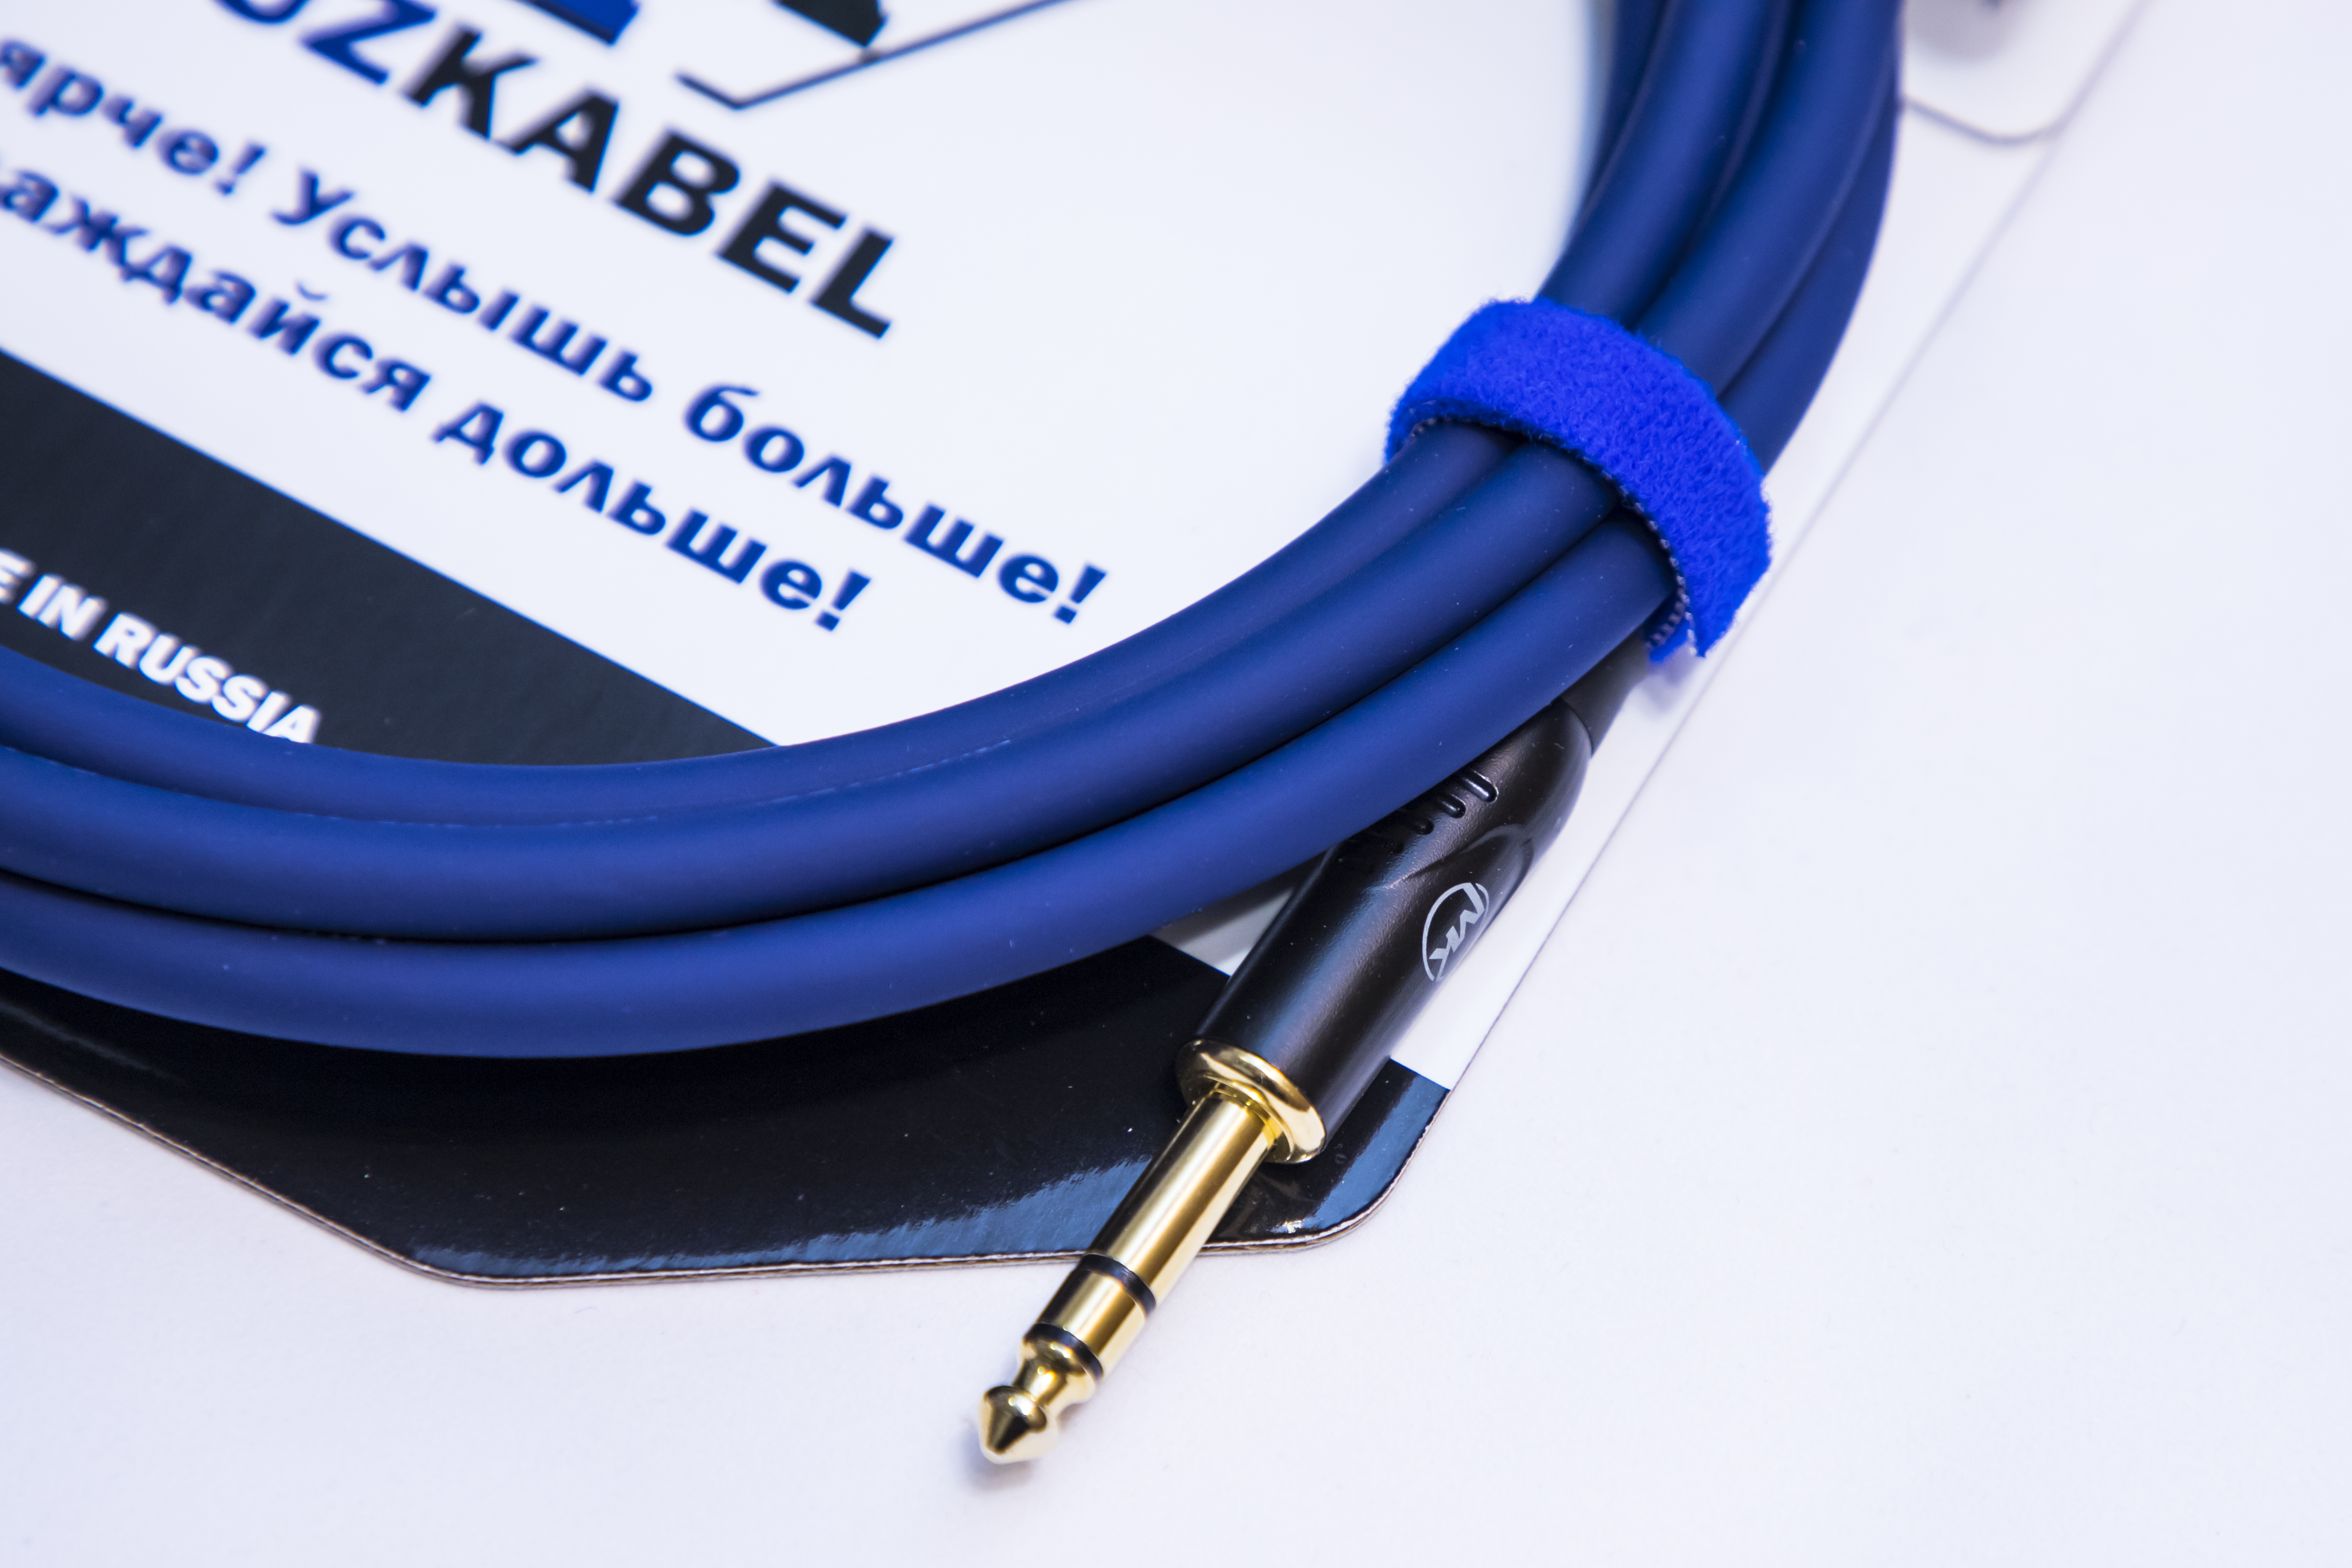 Аудио кабель MUZKABEL BFJMK1S - 1 метр, XLR (мама) - JACK (стерео)